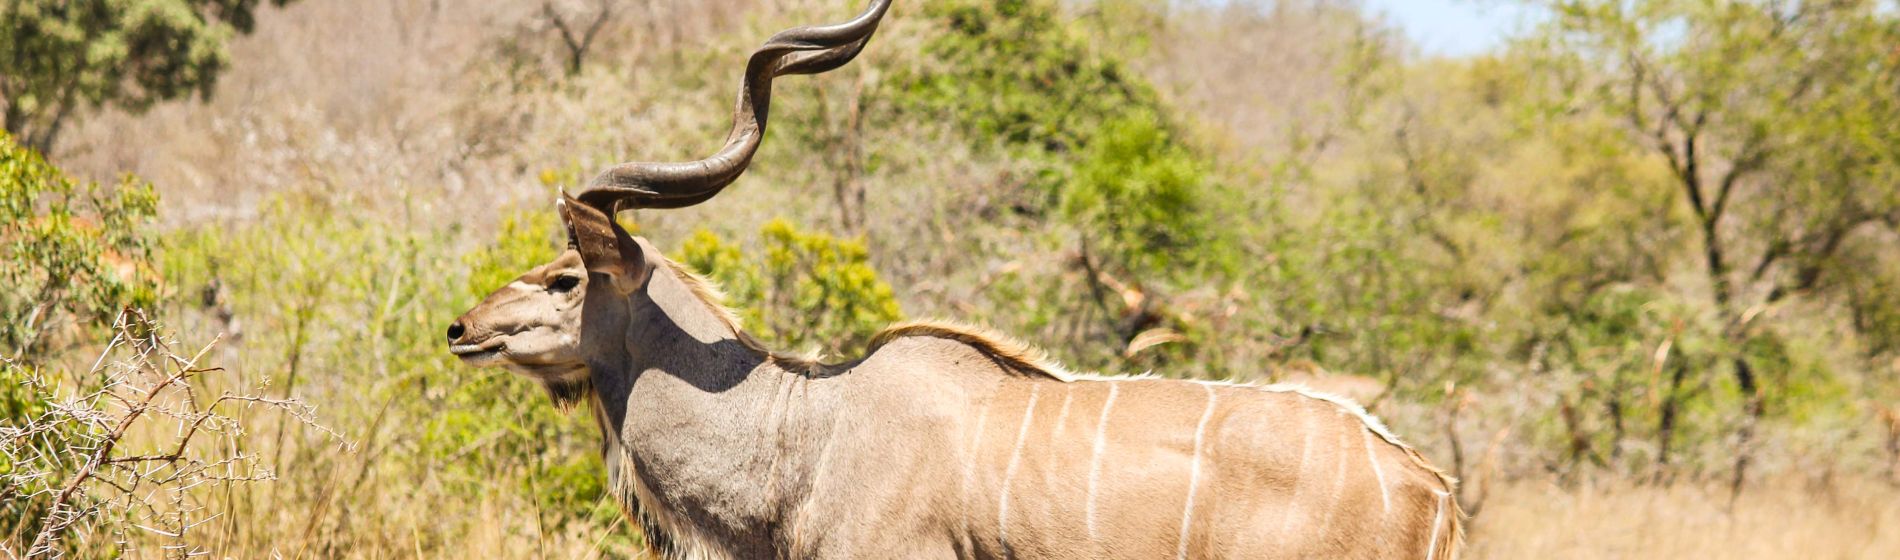 kudu_im_kruegernationalpark_in_suedafrika_.jpg